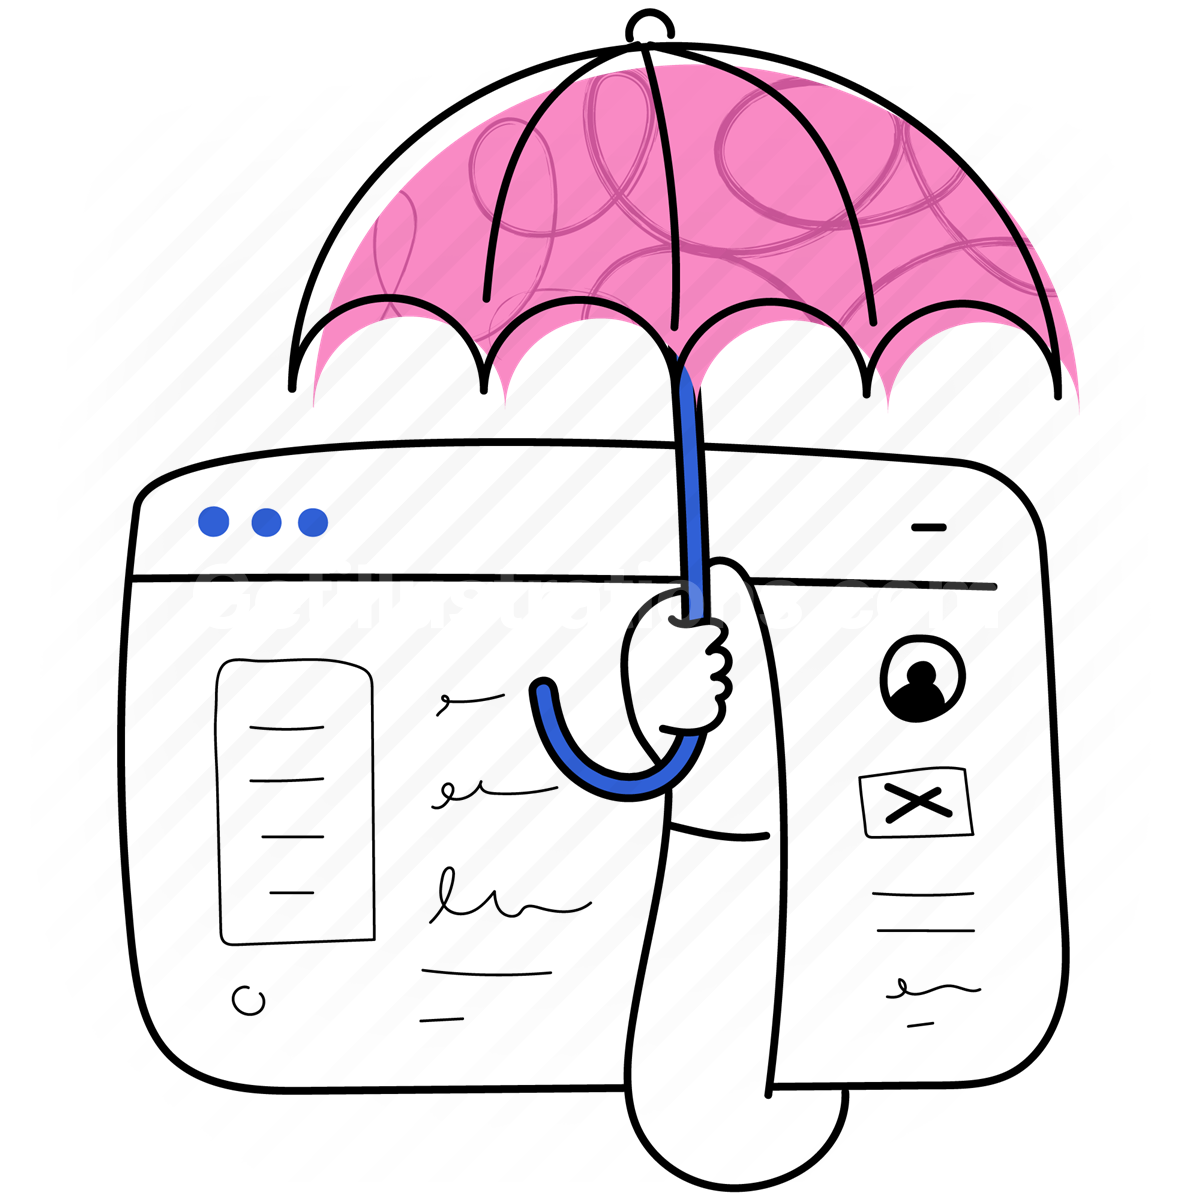 website, webpage, browser, umbrella, safety, secure, protection